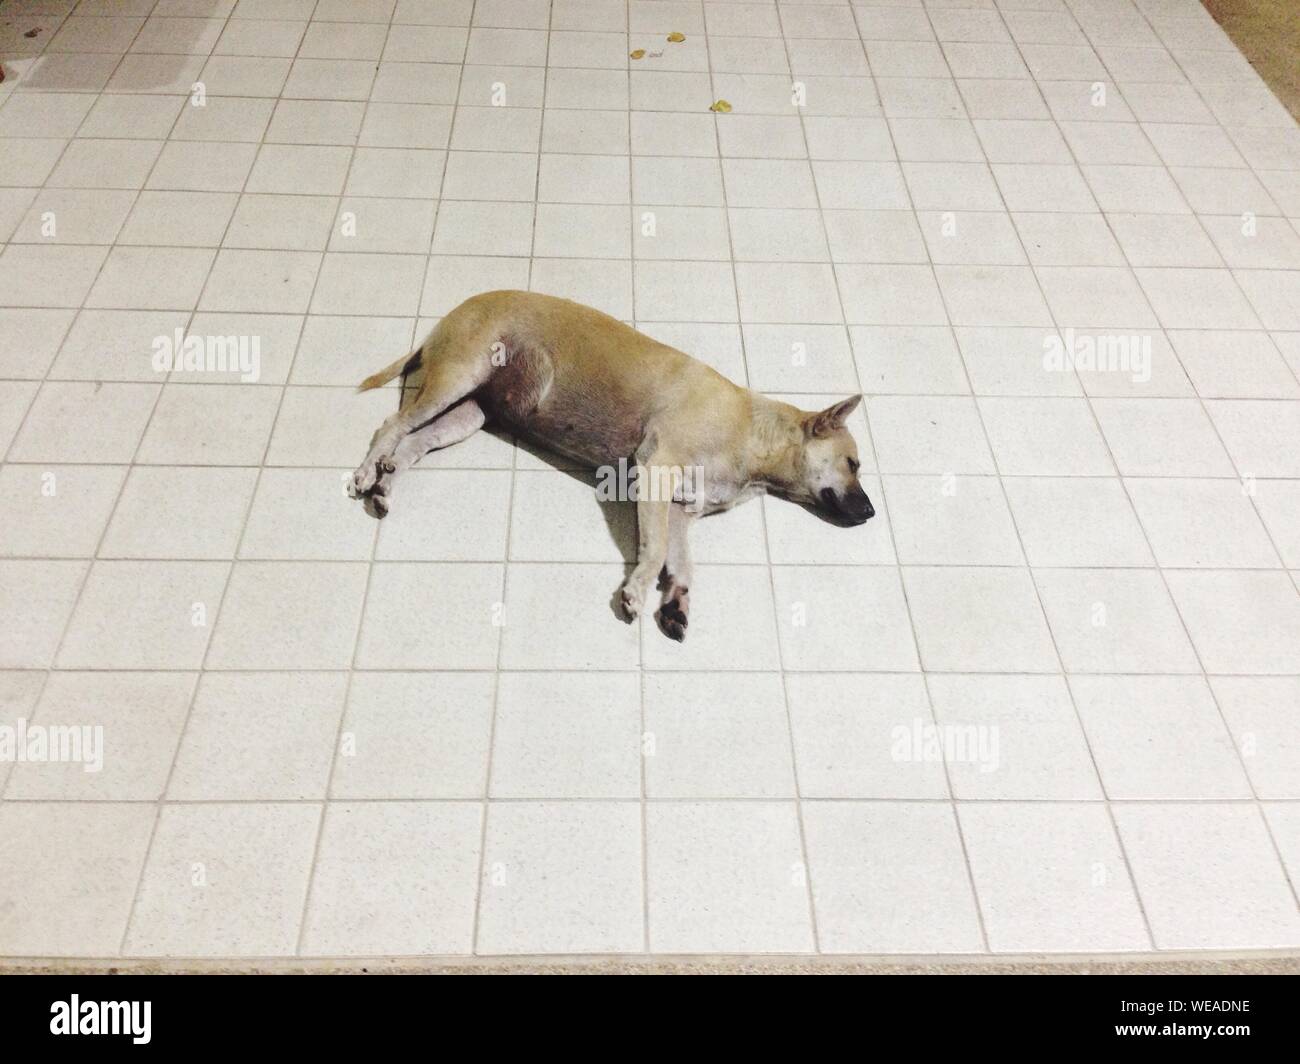 Dog On Tiled Floor Stock Photo